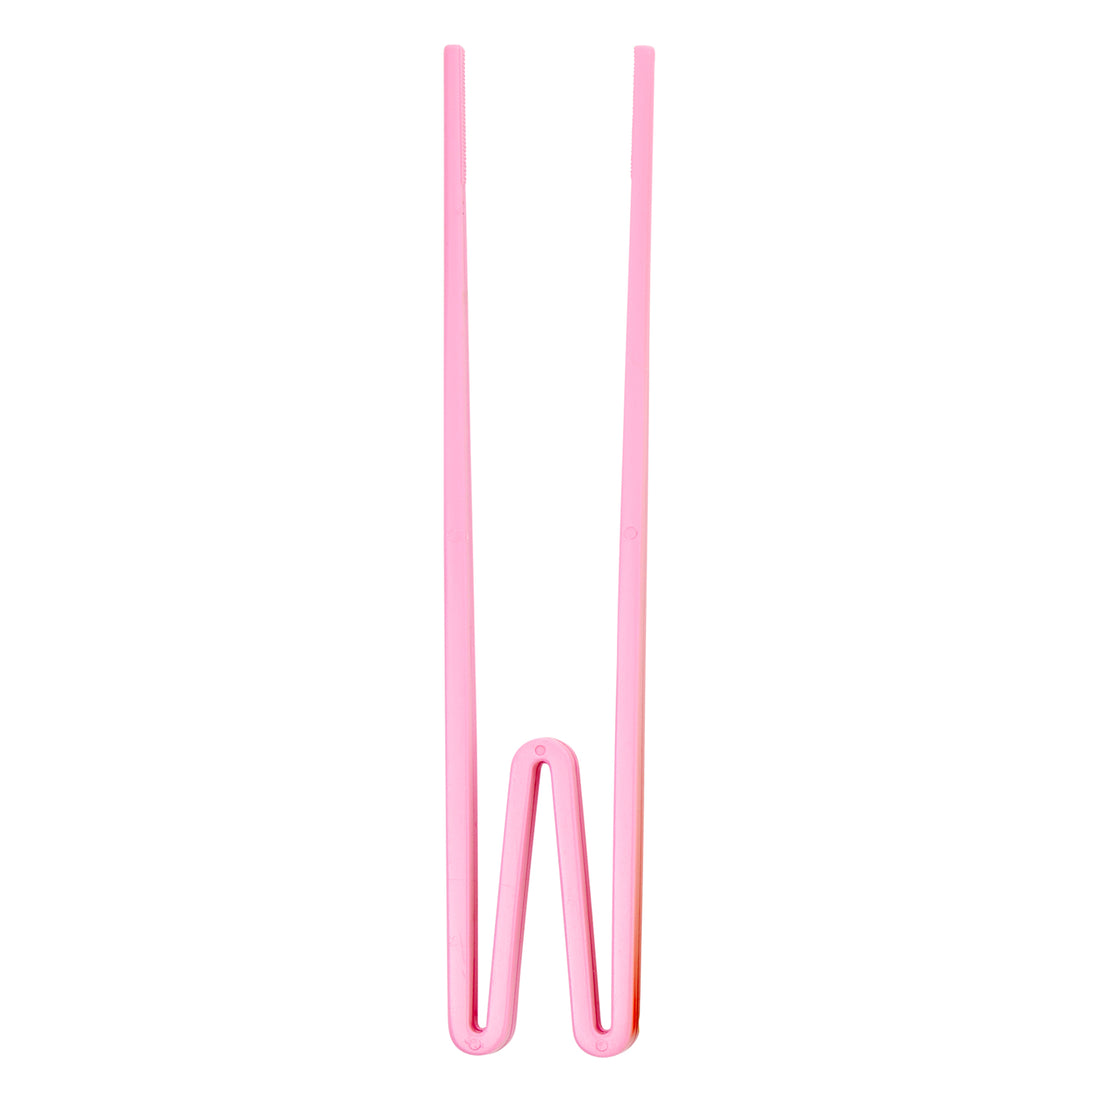 rice-dk-plastic-beginner-friendly-chopsticks-pink-rice-mesti-claii-